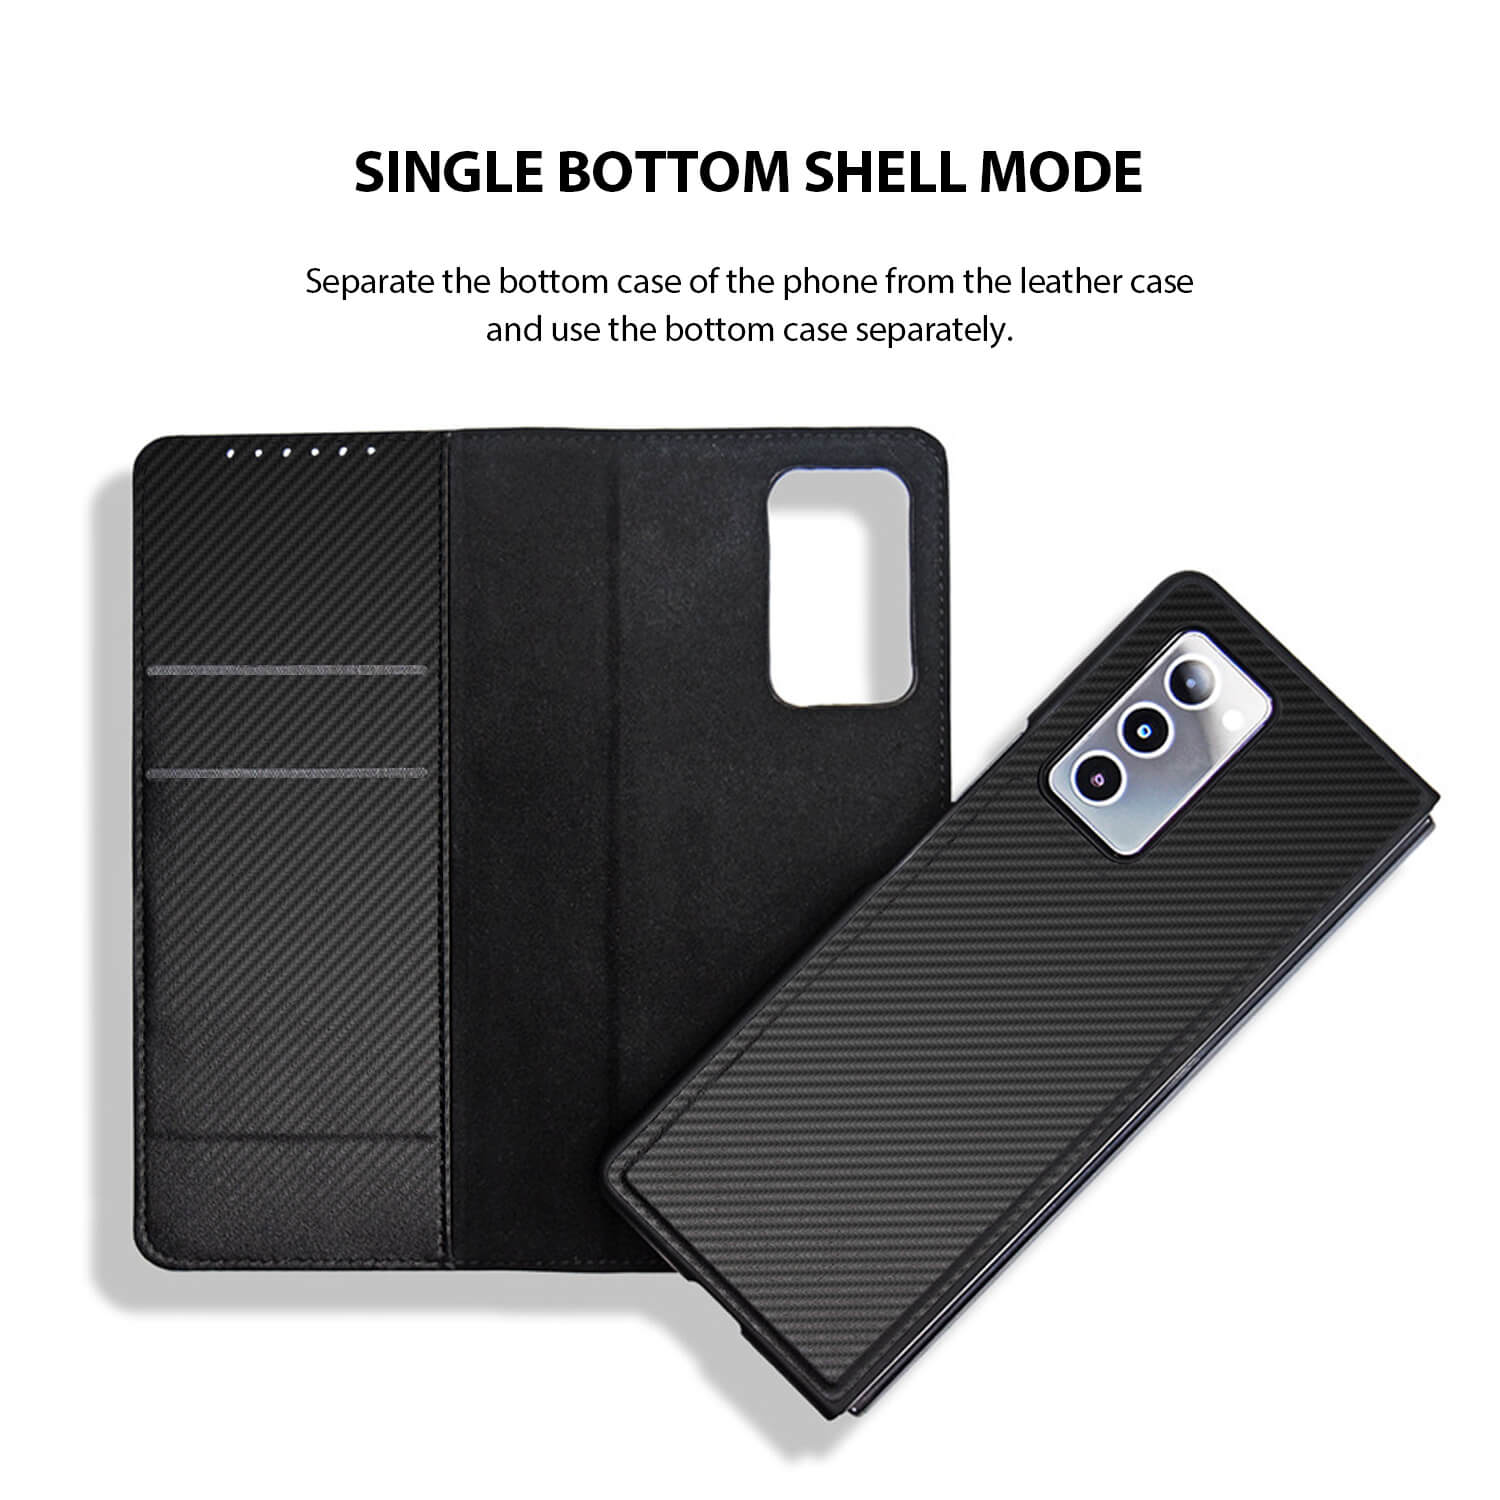 Tough On Galaxy Z Fold 2 Case Slim Leather Carbon Fibre Black